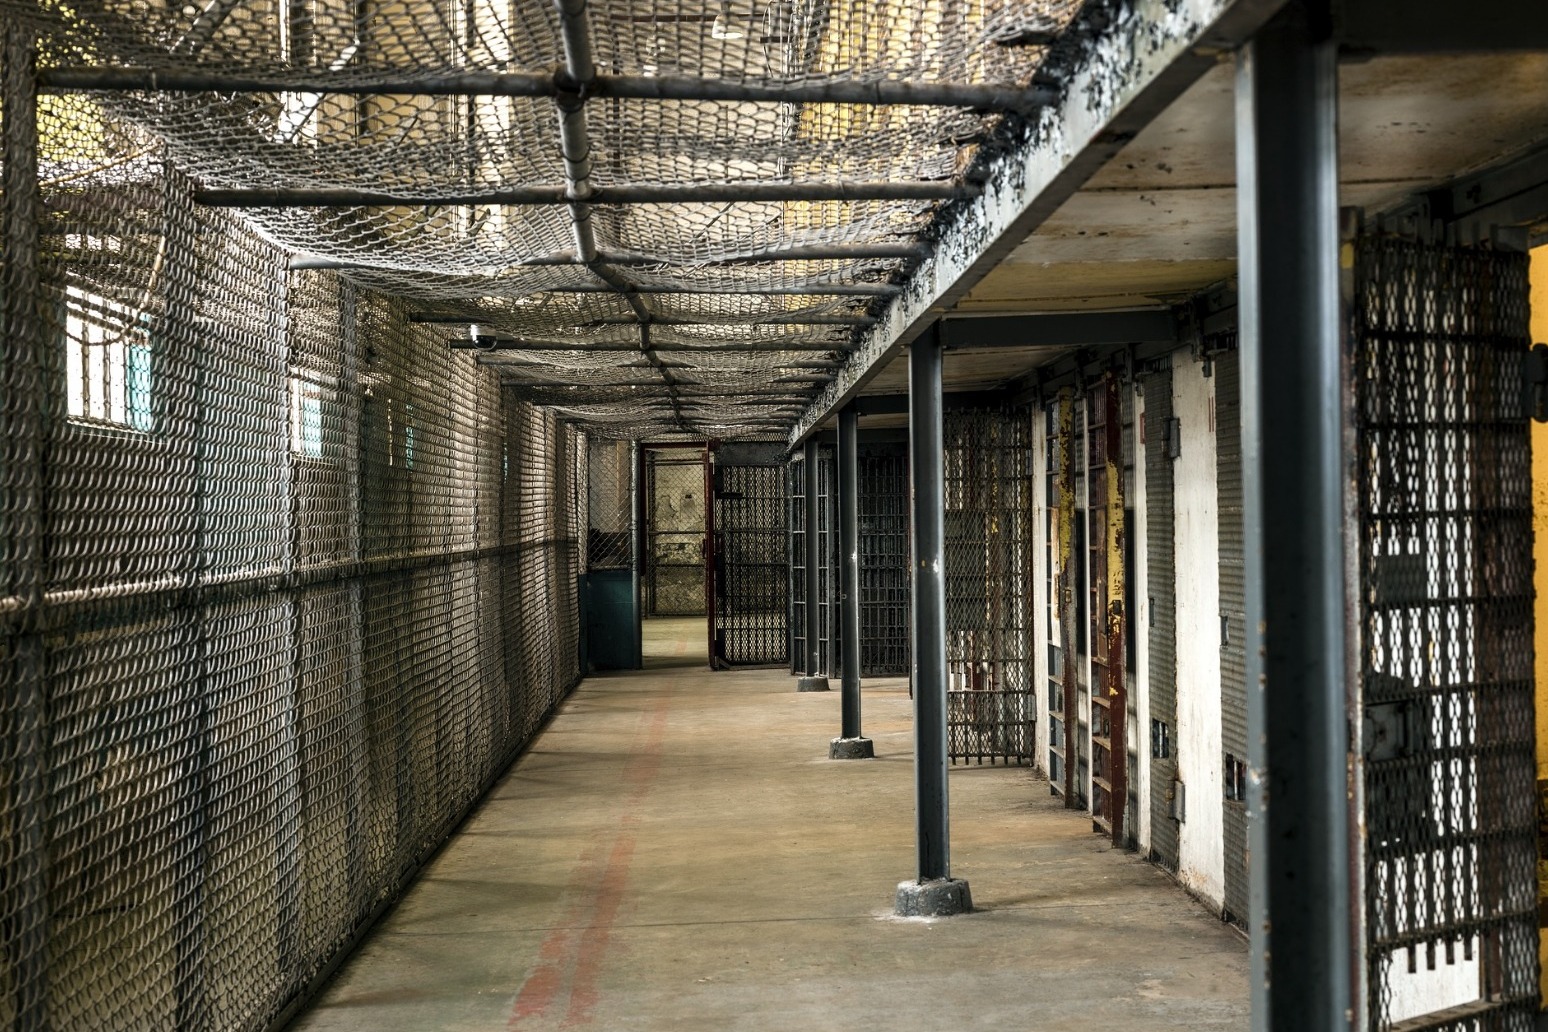 Prison reforms could see shorter sentences abolished. 